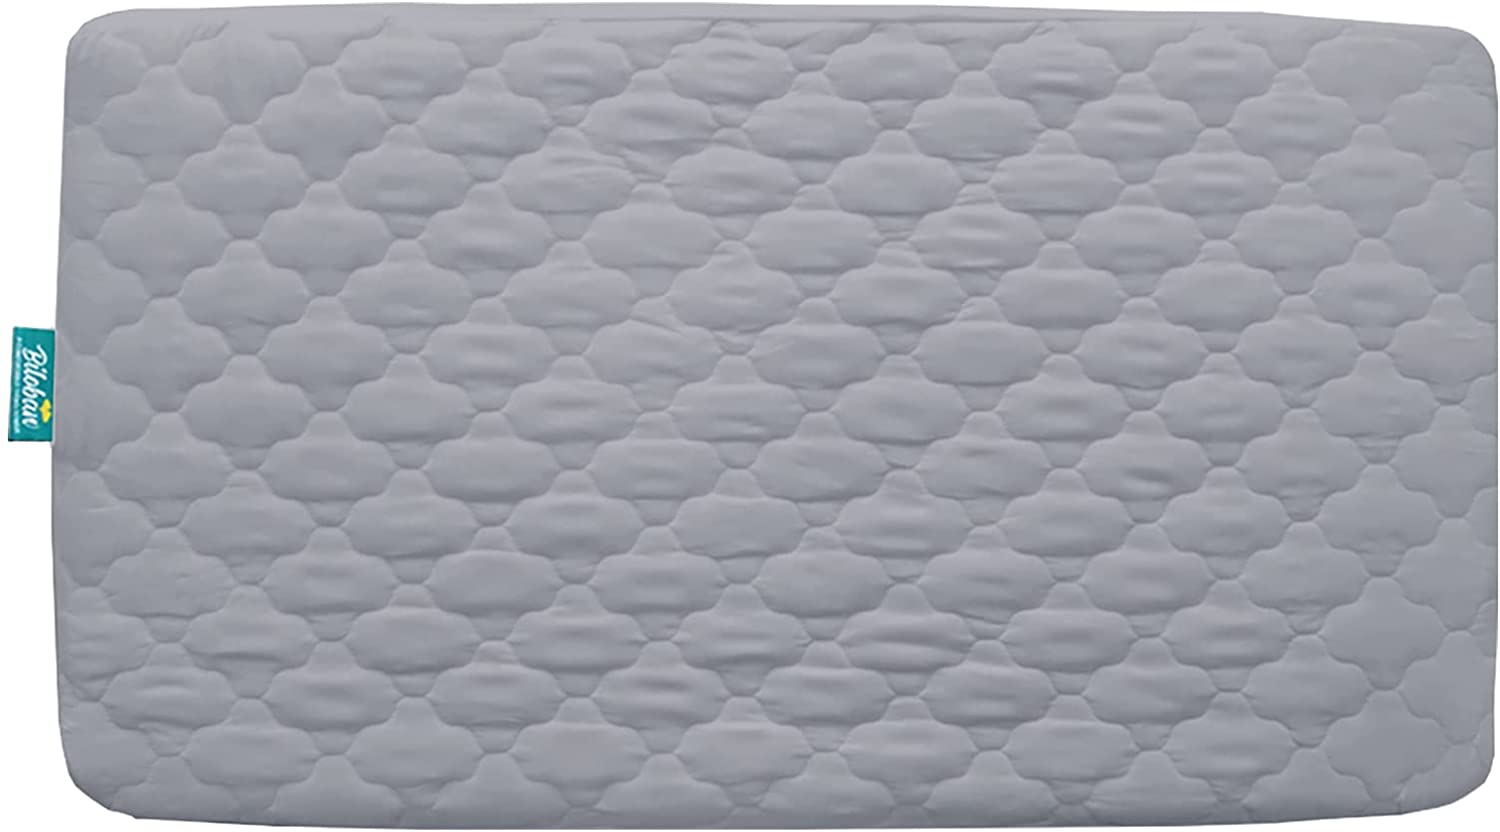 Crib Mattress Protector/ Pad Cover - Ultra Soft Microfiber, Waterproof (for Standard Crib/ Toddler Bed), Grey - Biloban Online Store